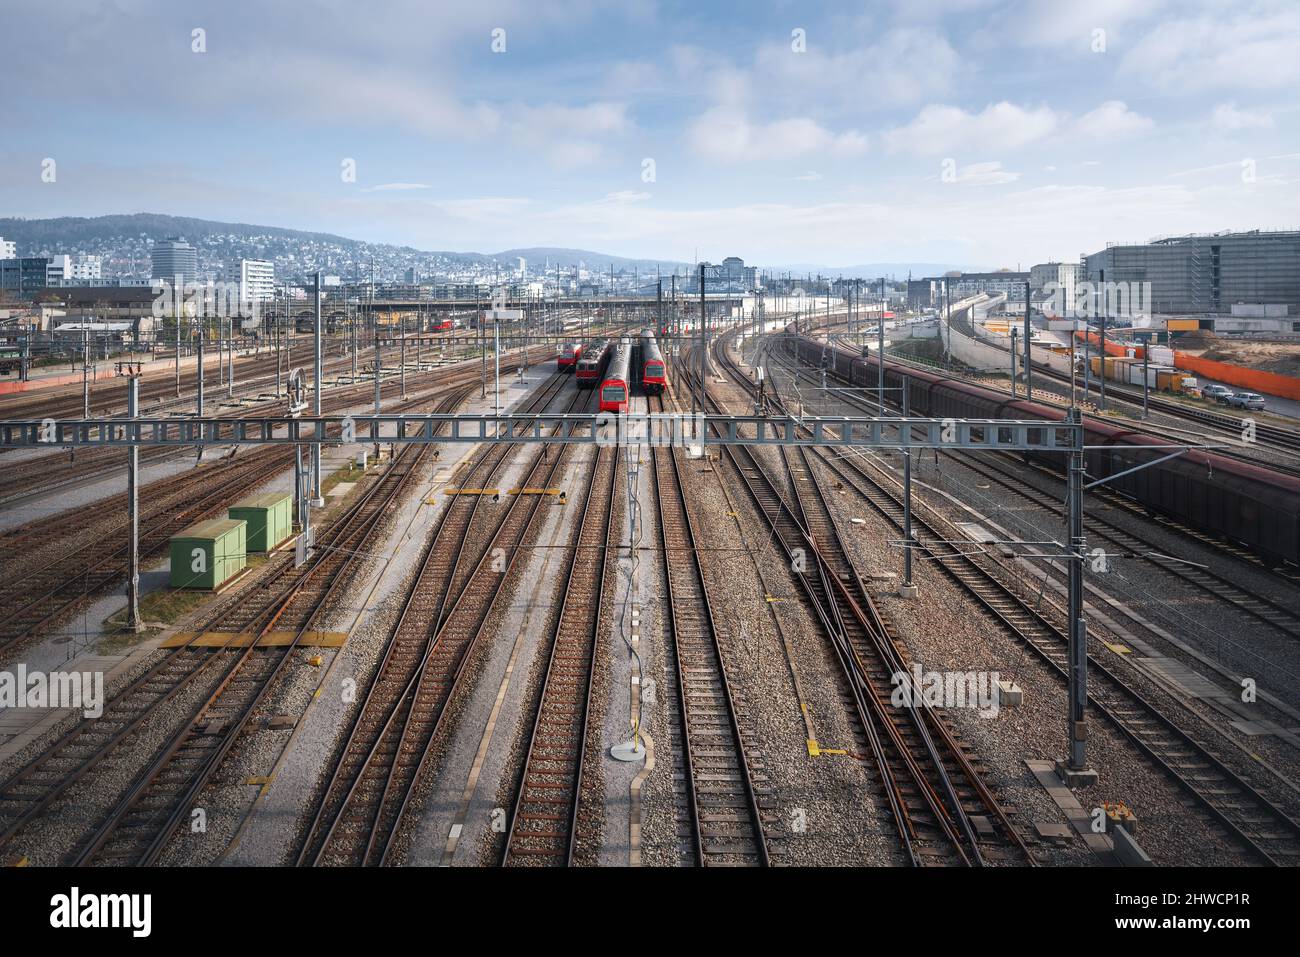 Railway tracks and trains - Zurich, Switzerland Stock Photo